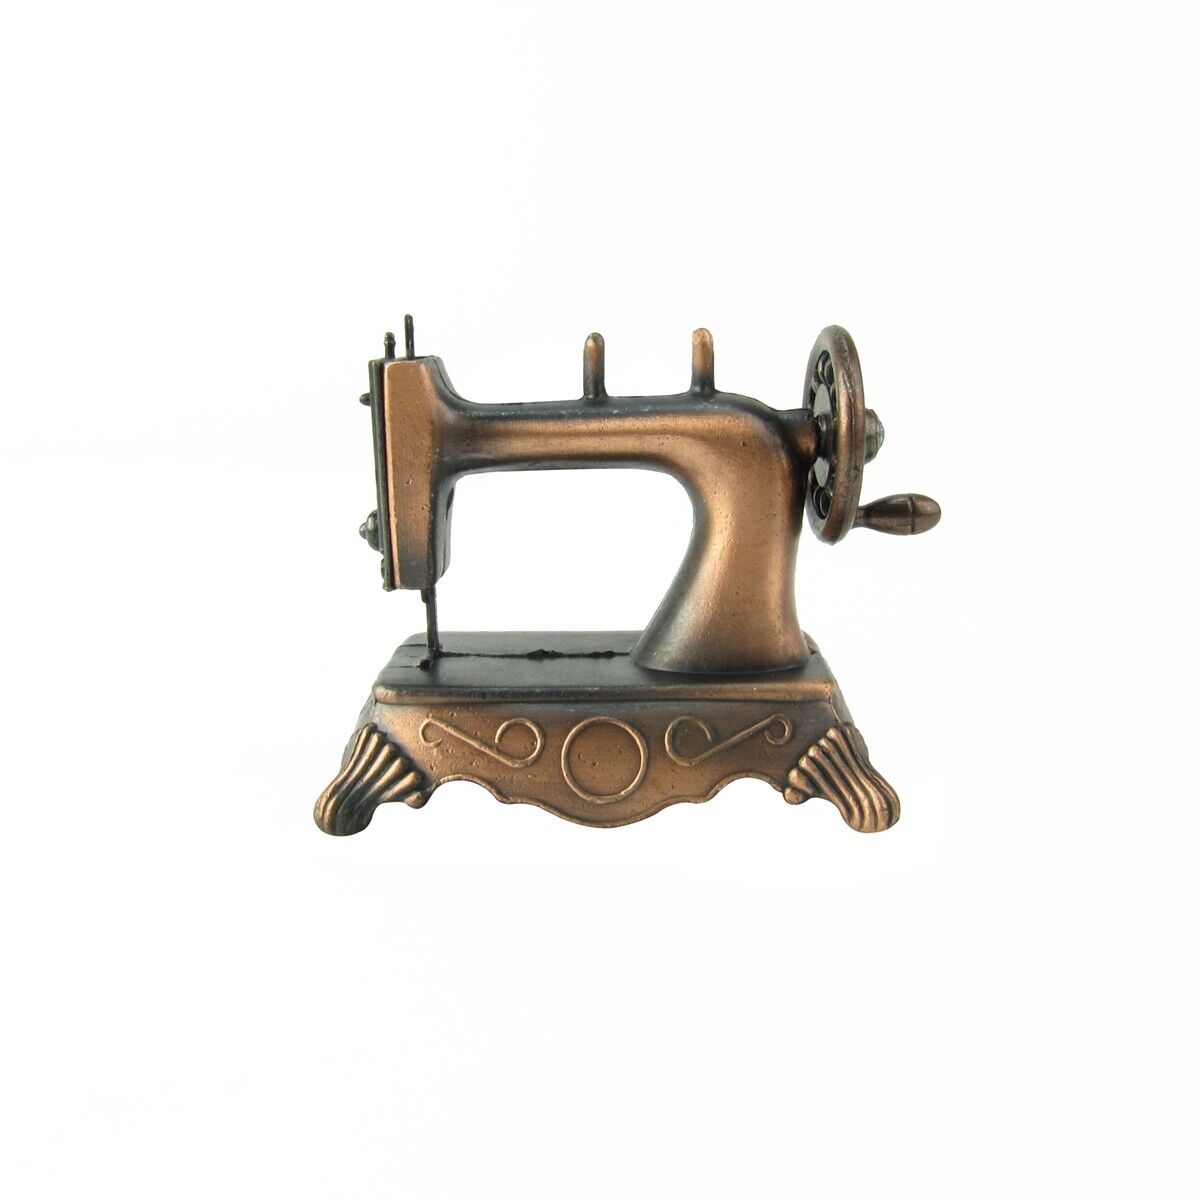 1:6 Scale Model Hand Sewing Machine Dollhouse Miniature Metal Pencil Sharpener